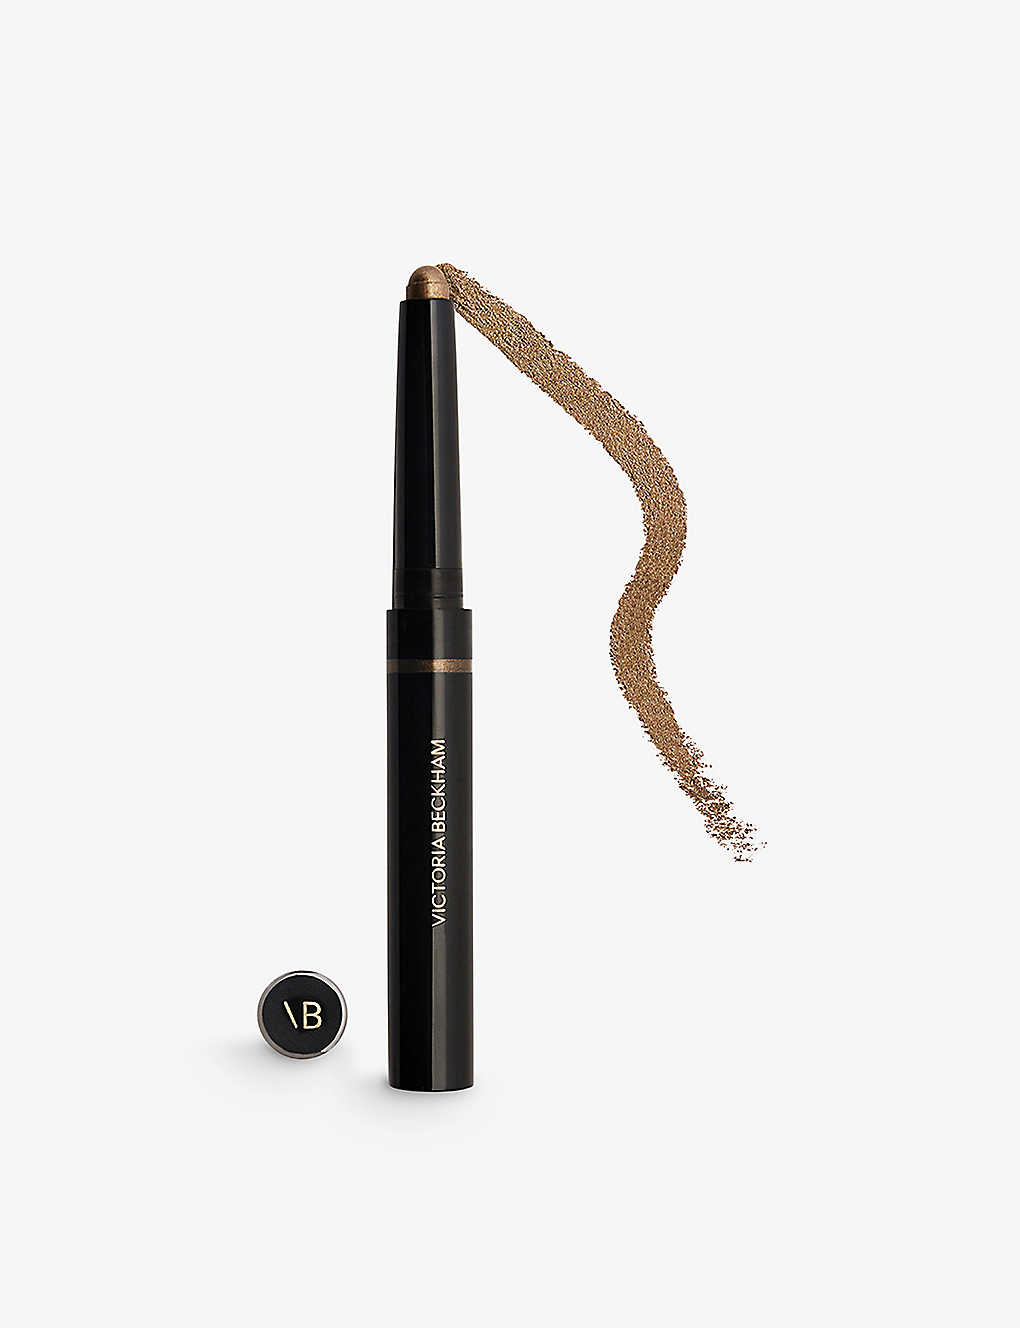 Victoria Beckham Beauty Caramel Eyewear Eyeshadow Stick 1.7g